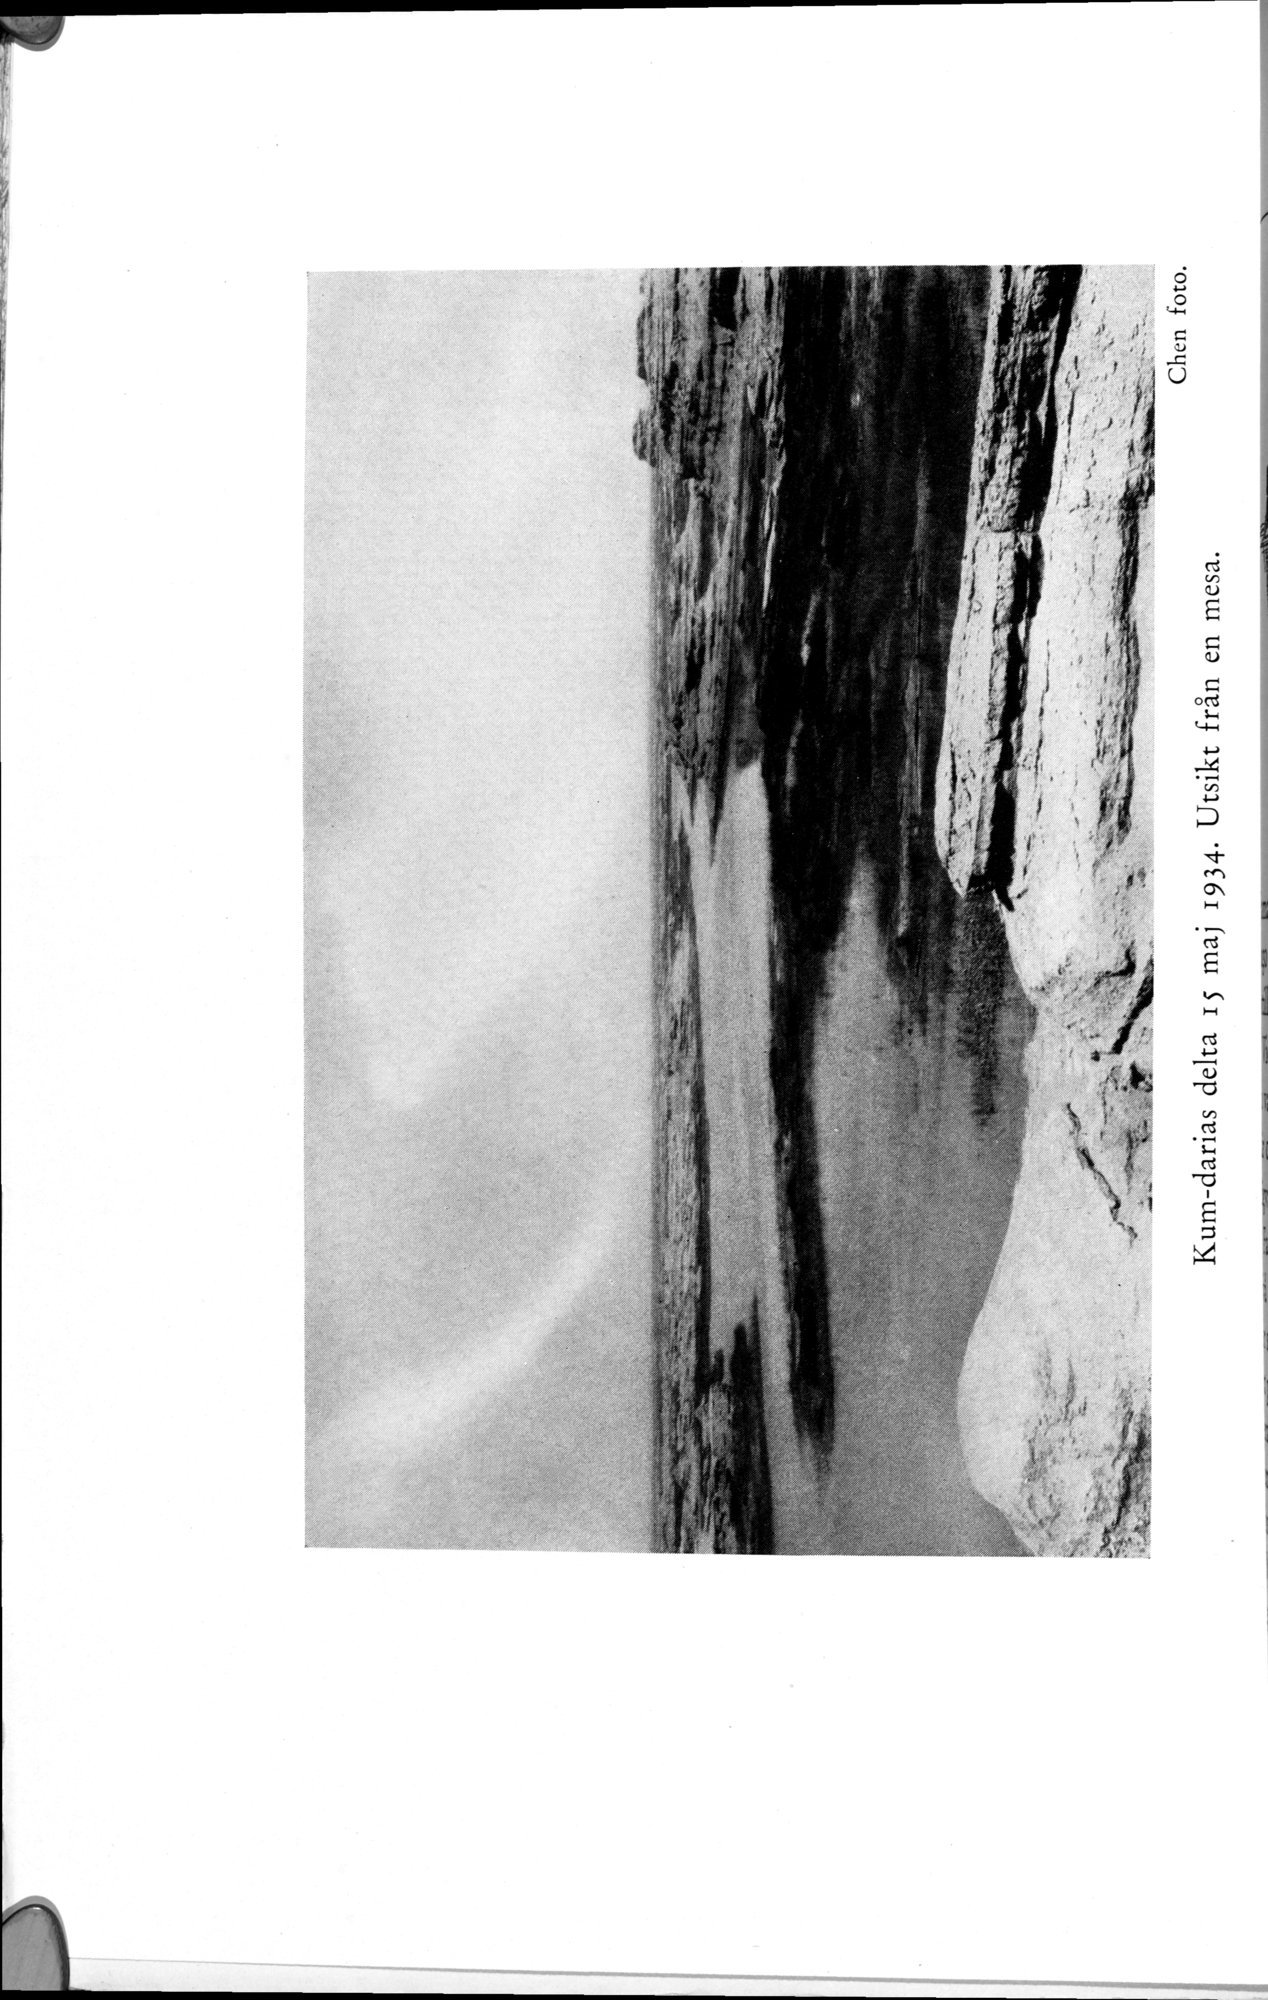 Den Vandrande Sjön : vol.1 / Page 194 (Grayscale High Resolution Image)